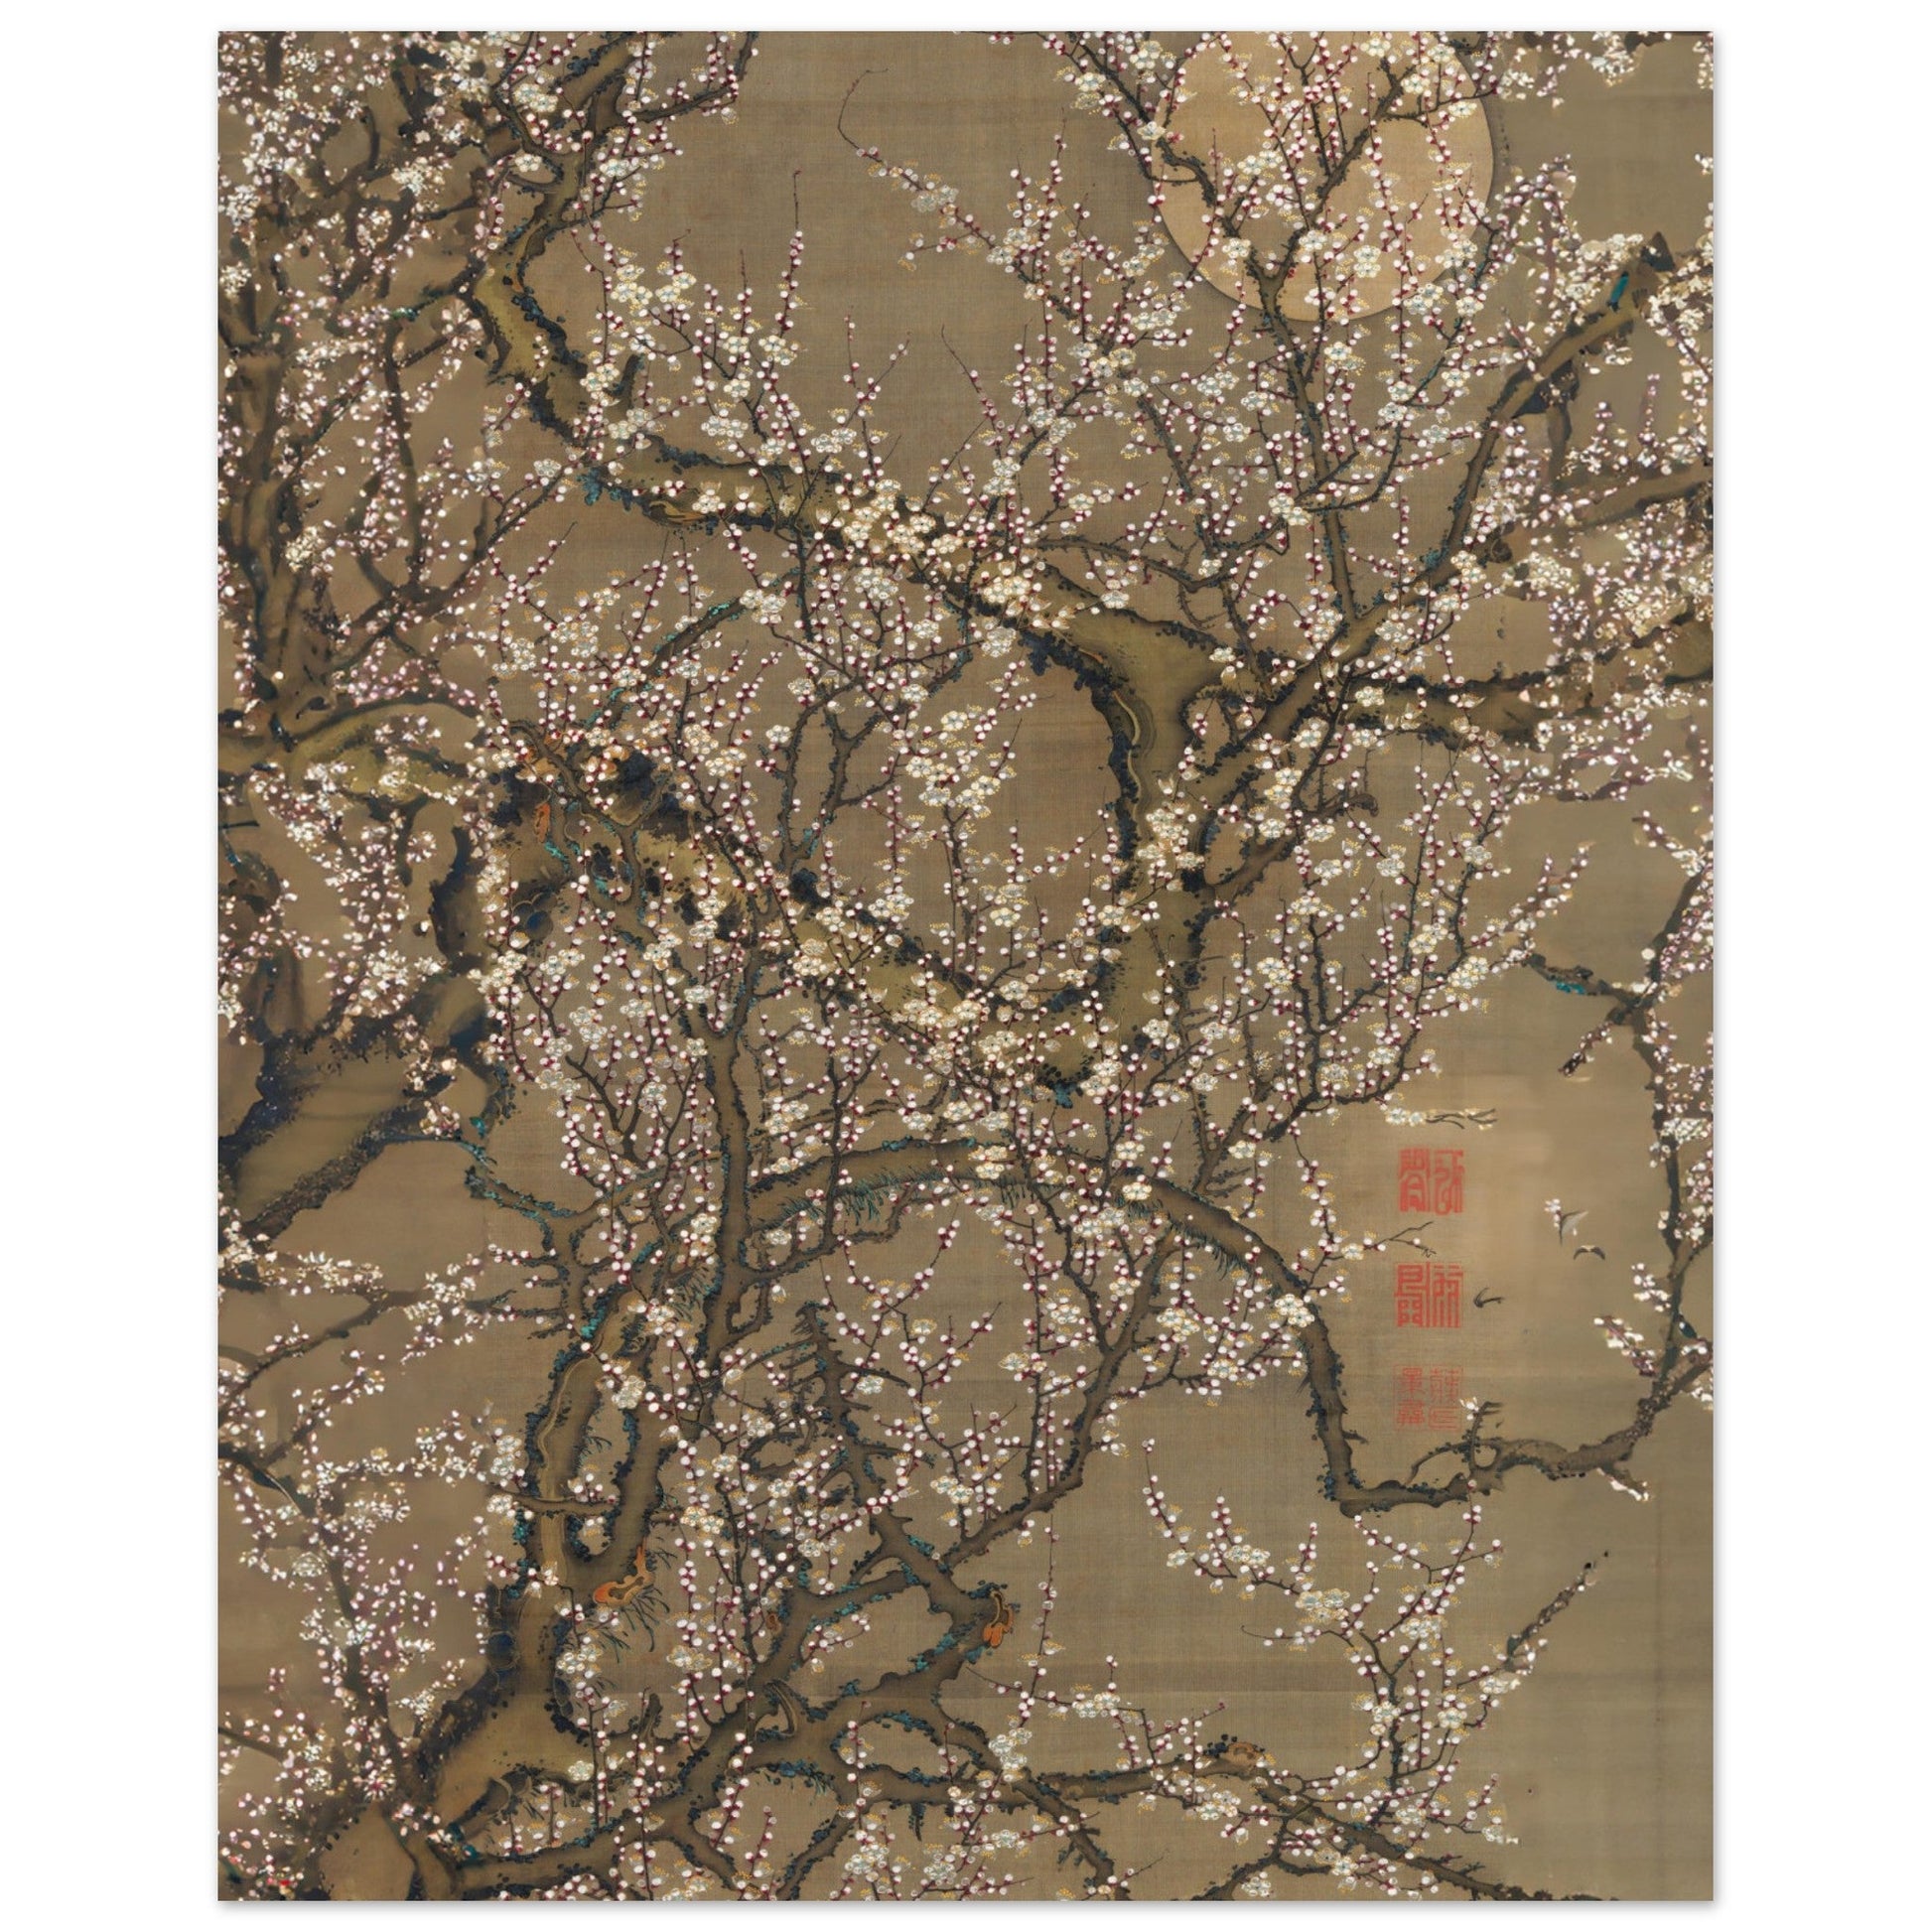 Vintage Japanese - Flowers and Moon, Flowers and Moon, Vintage Japanese, , #illieeart